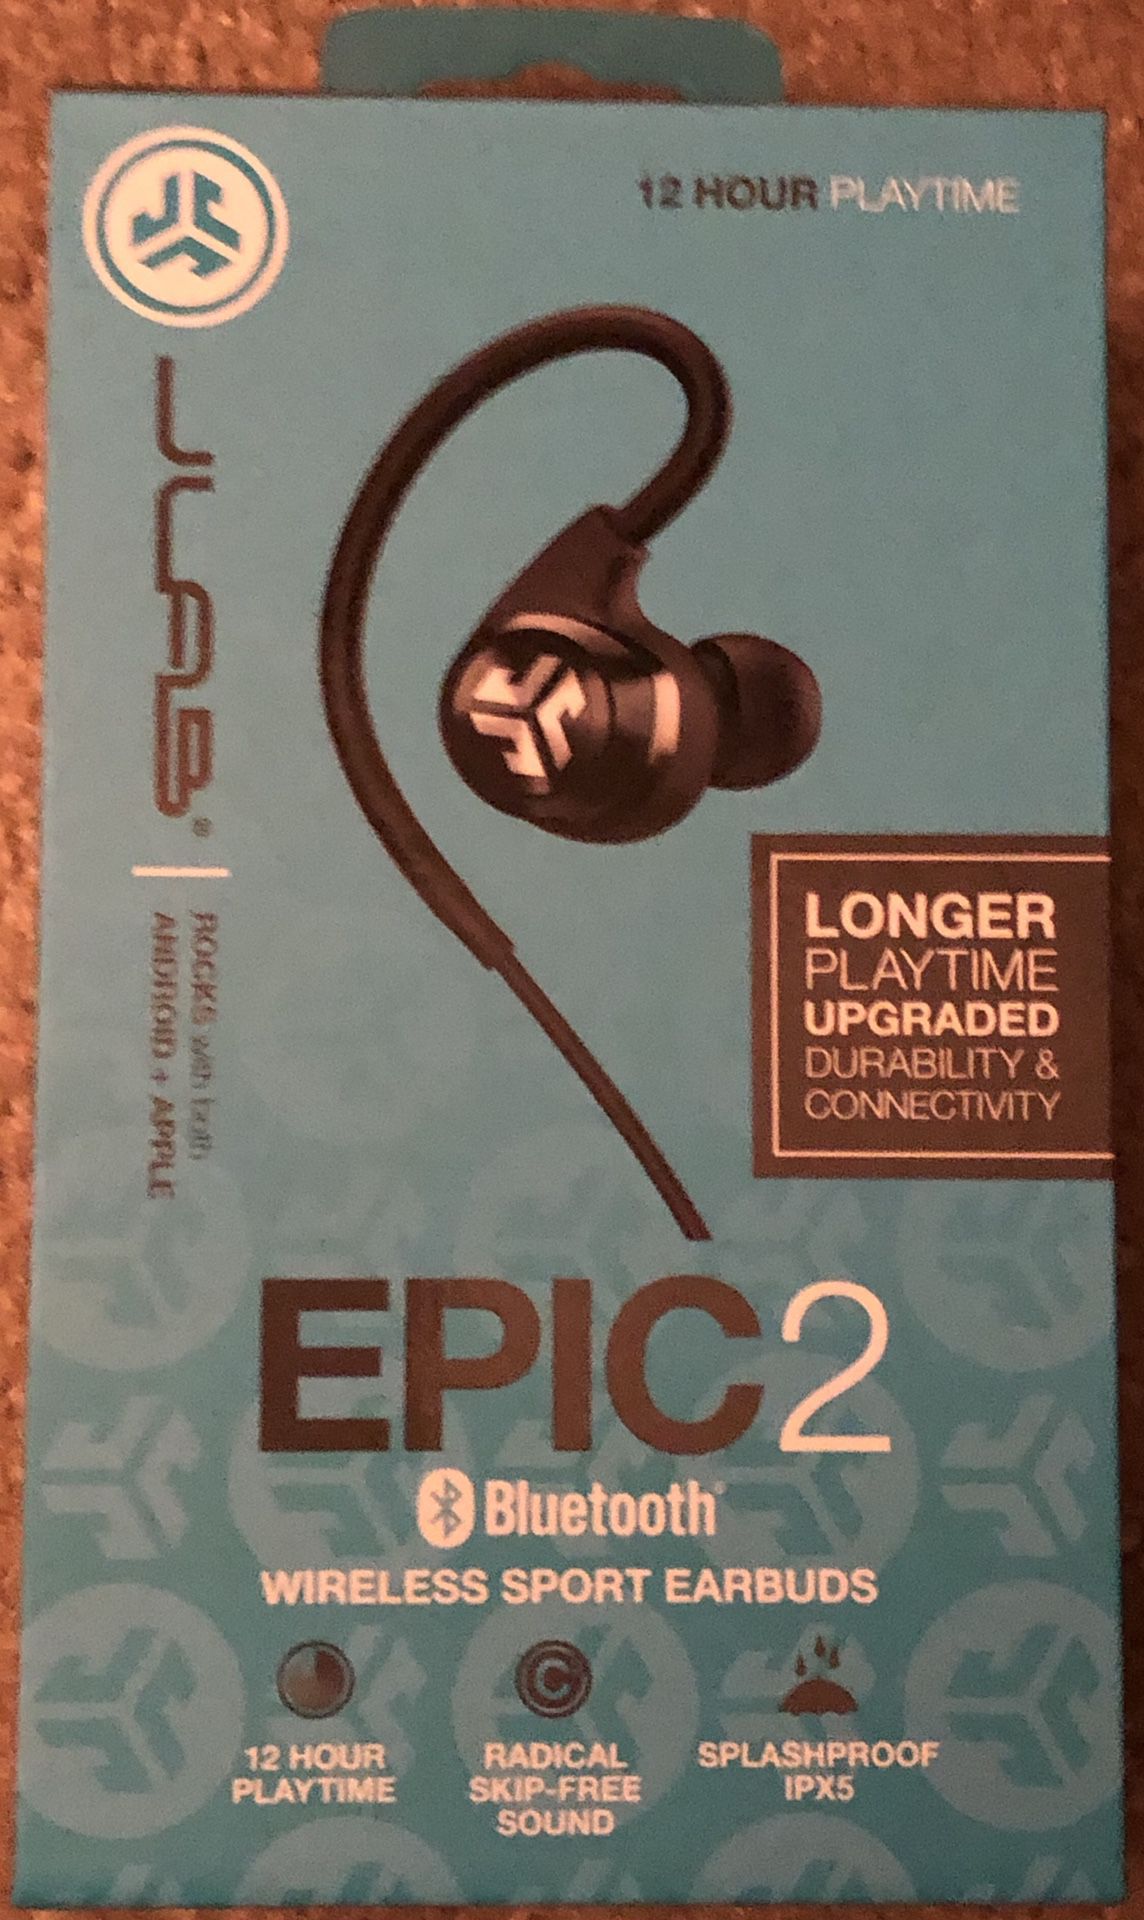 New Jlab epic 2 bluetooth wireless sport earbuds waterproof ipx5 12 hr playback